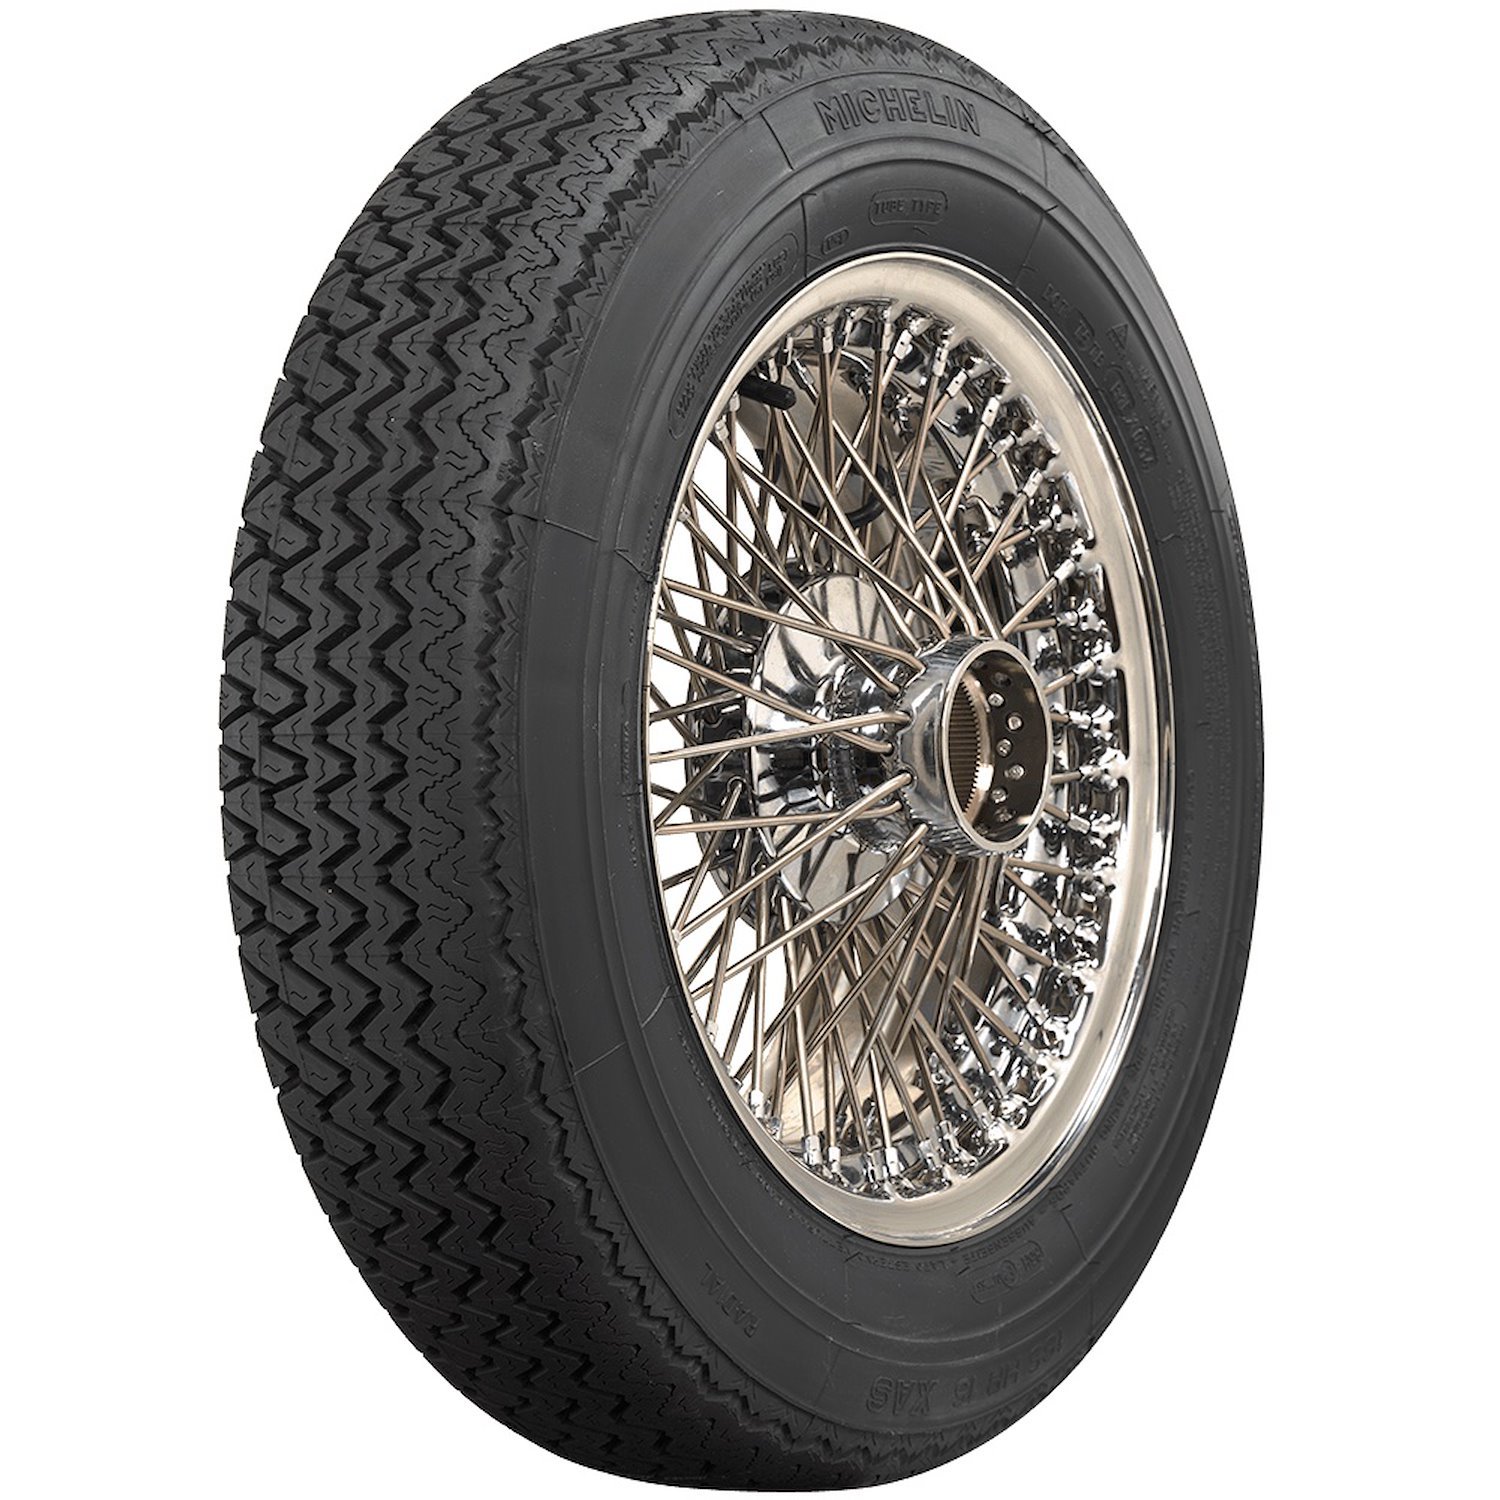 57983 Tire, Michelin XAS, 185/70R14 88V